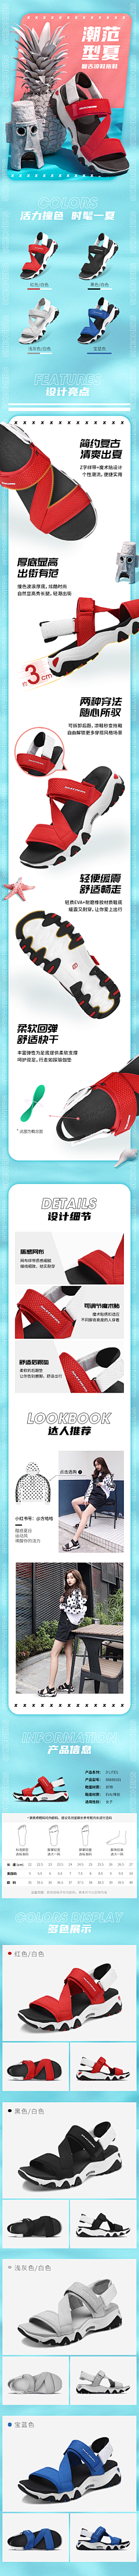 hanhan119采集到鞋子详情页